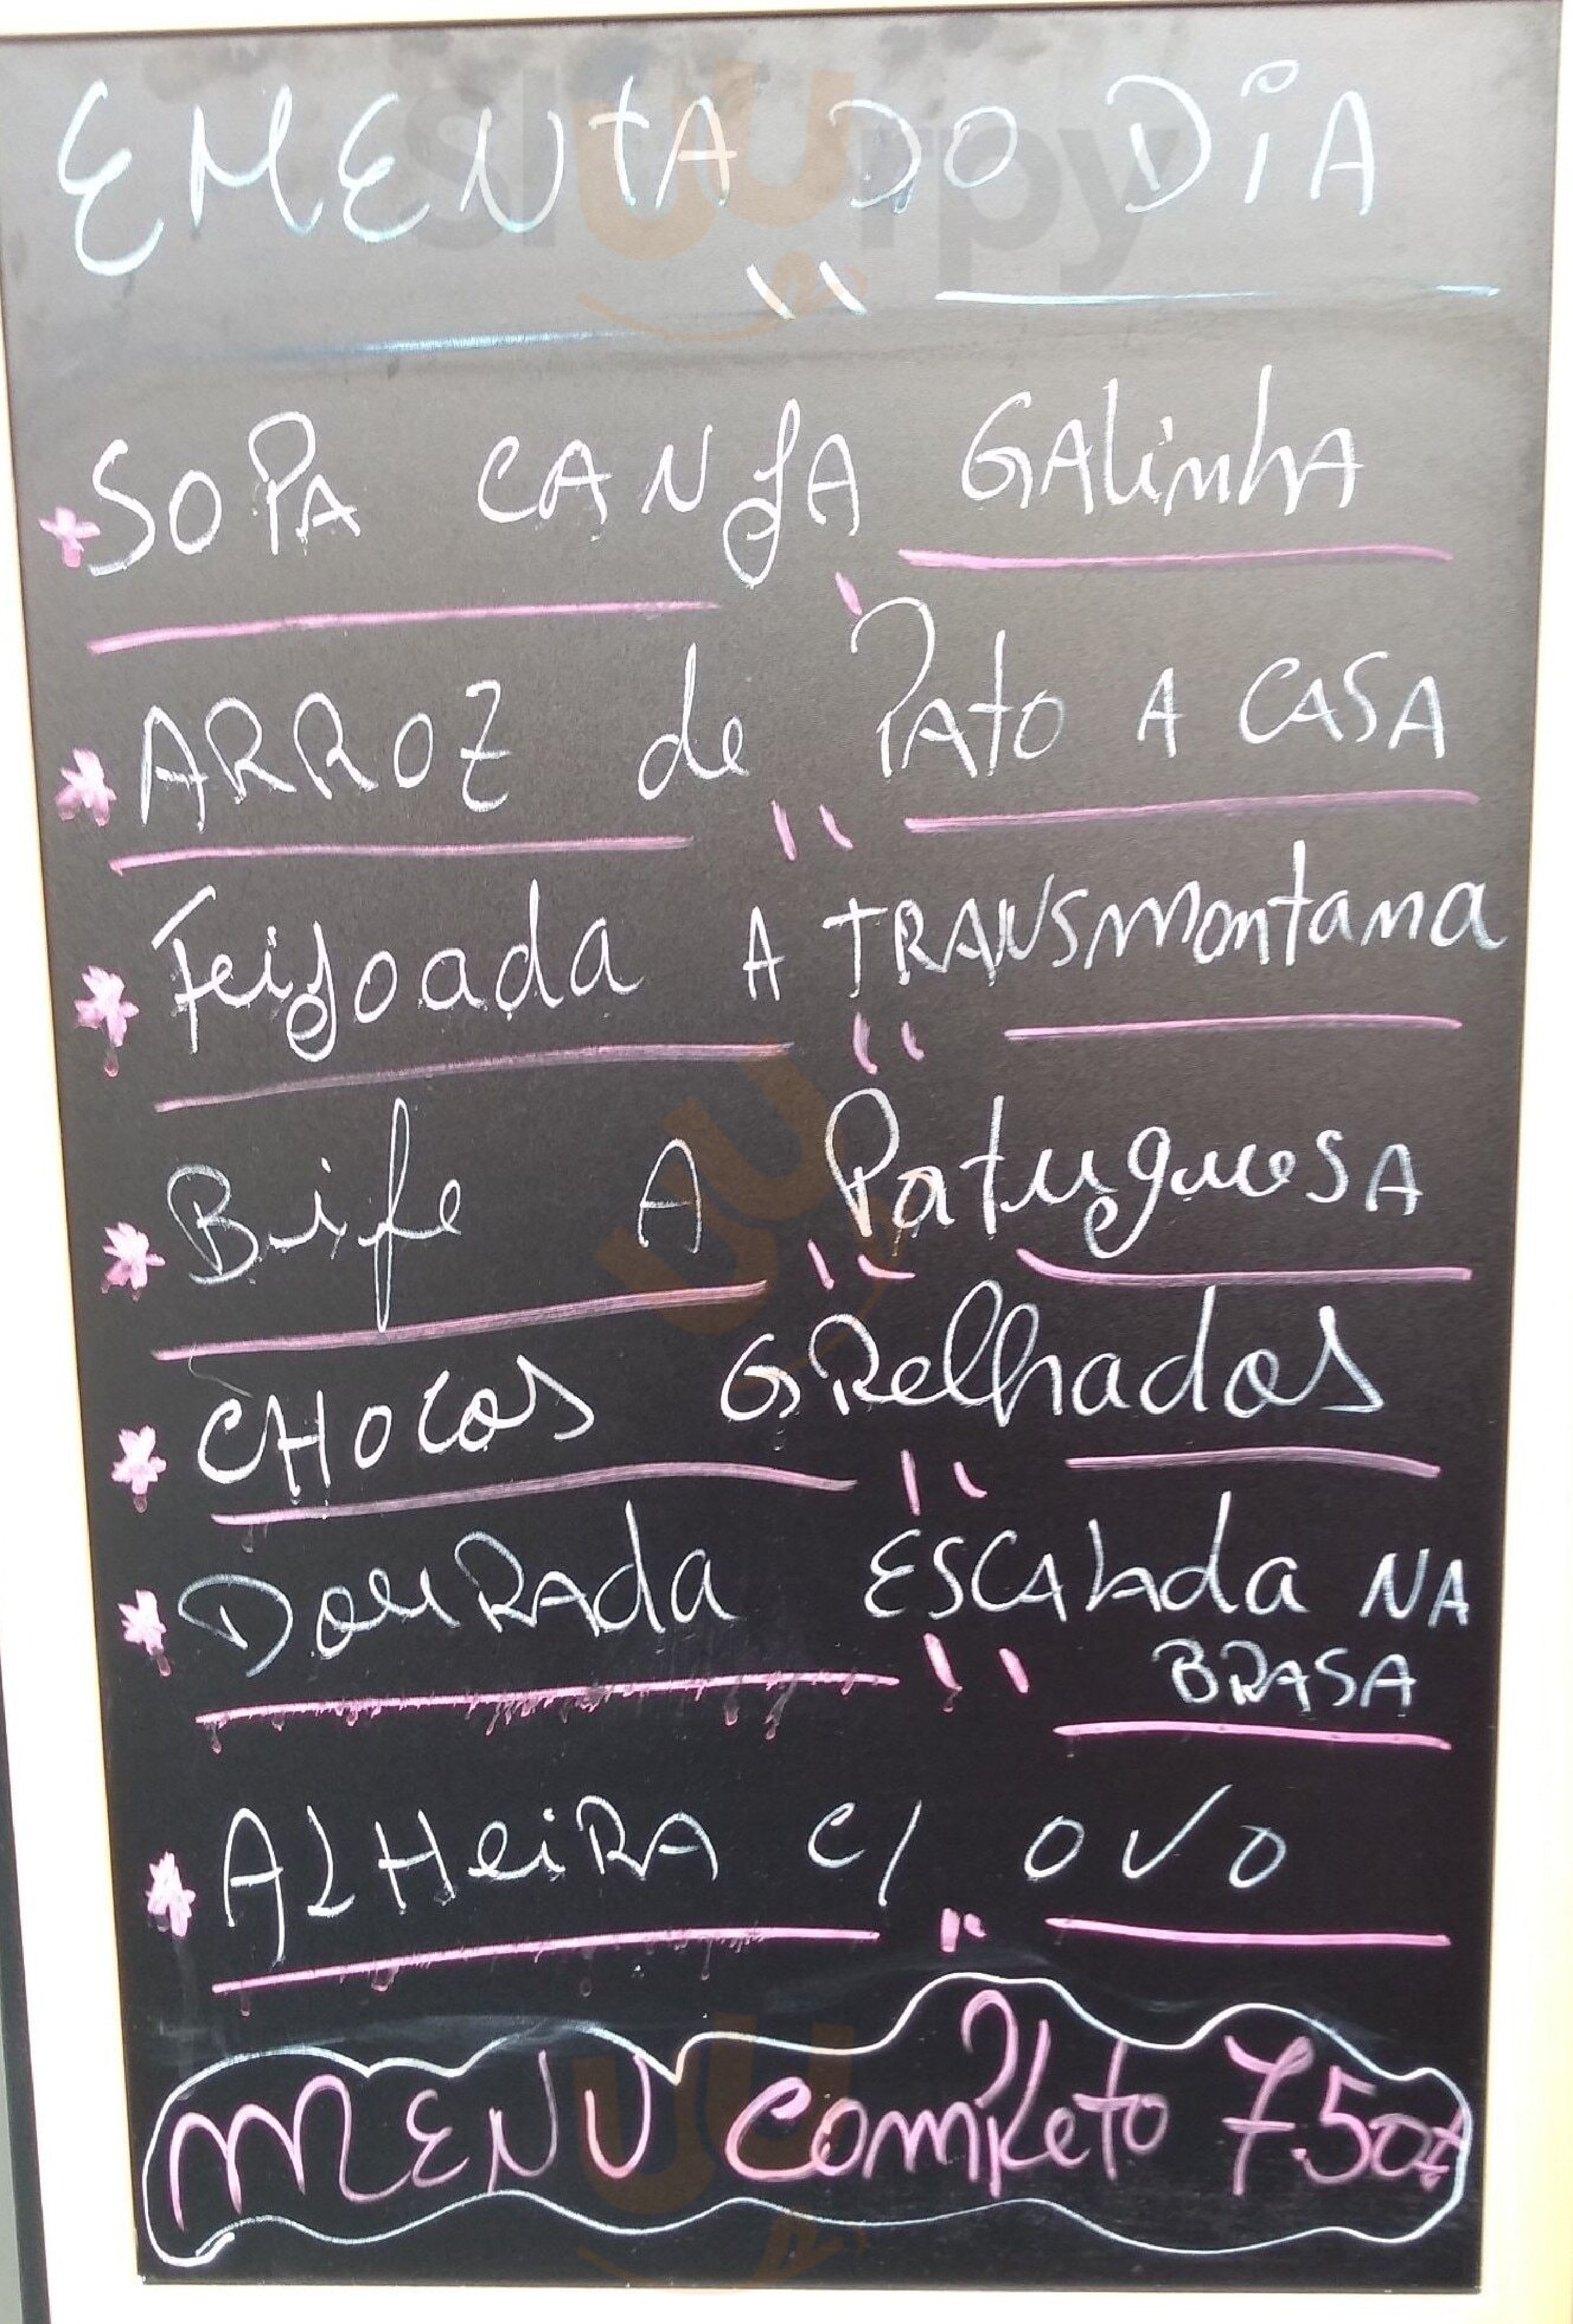 Pastelaria Sao Carlos Lisboa Menu - 1